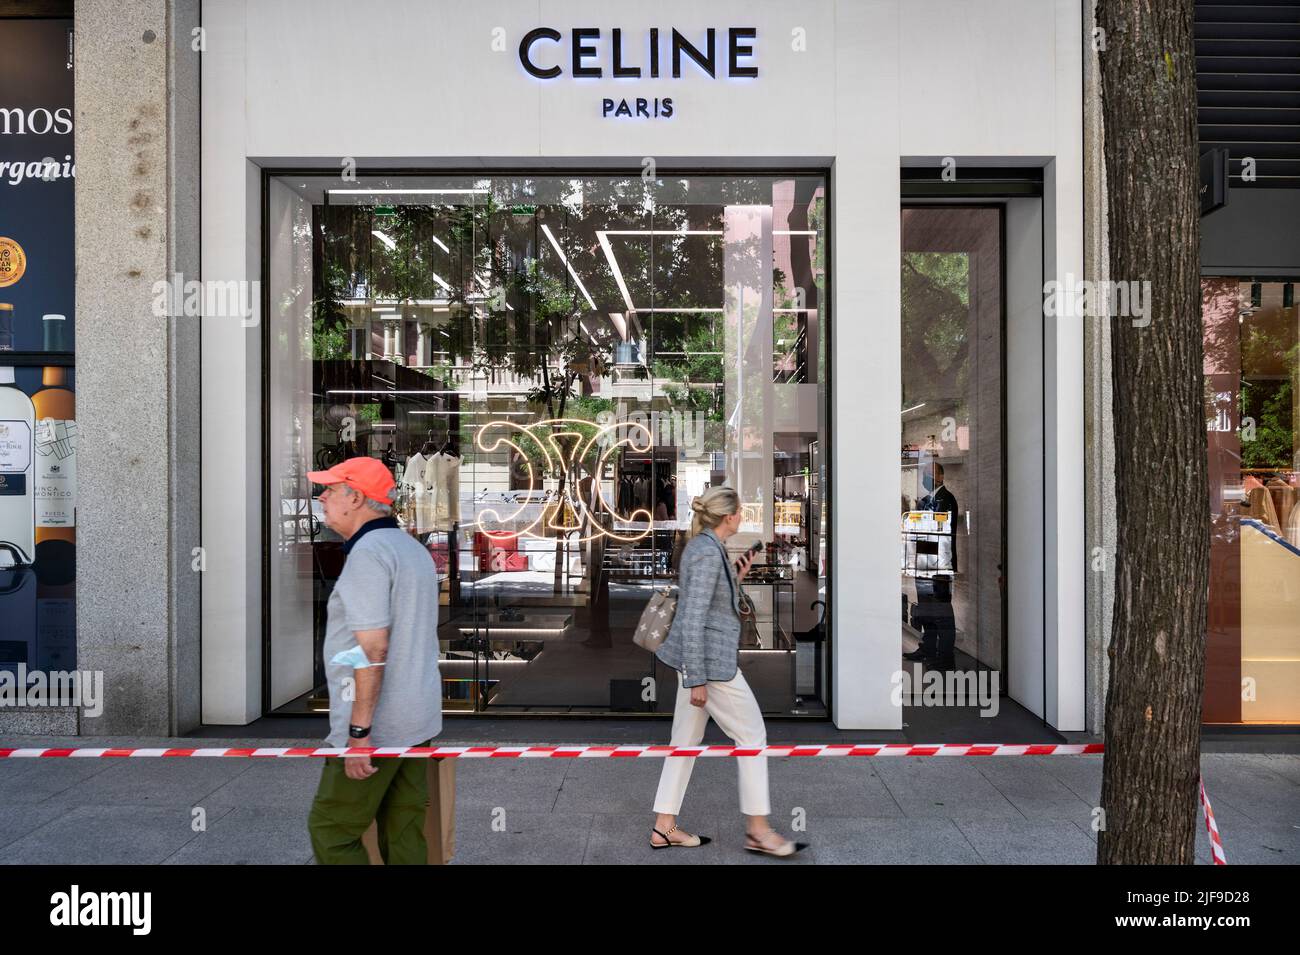 PARIS AIRPORT Luxury Shopping Vlog 2021 - Chanel, Celine, Gucci